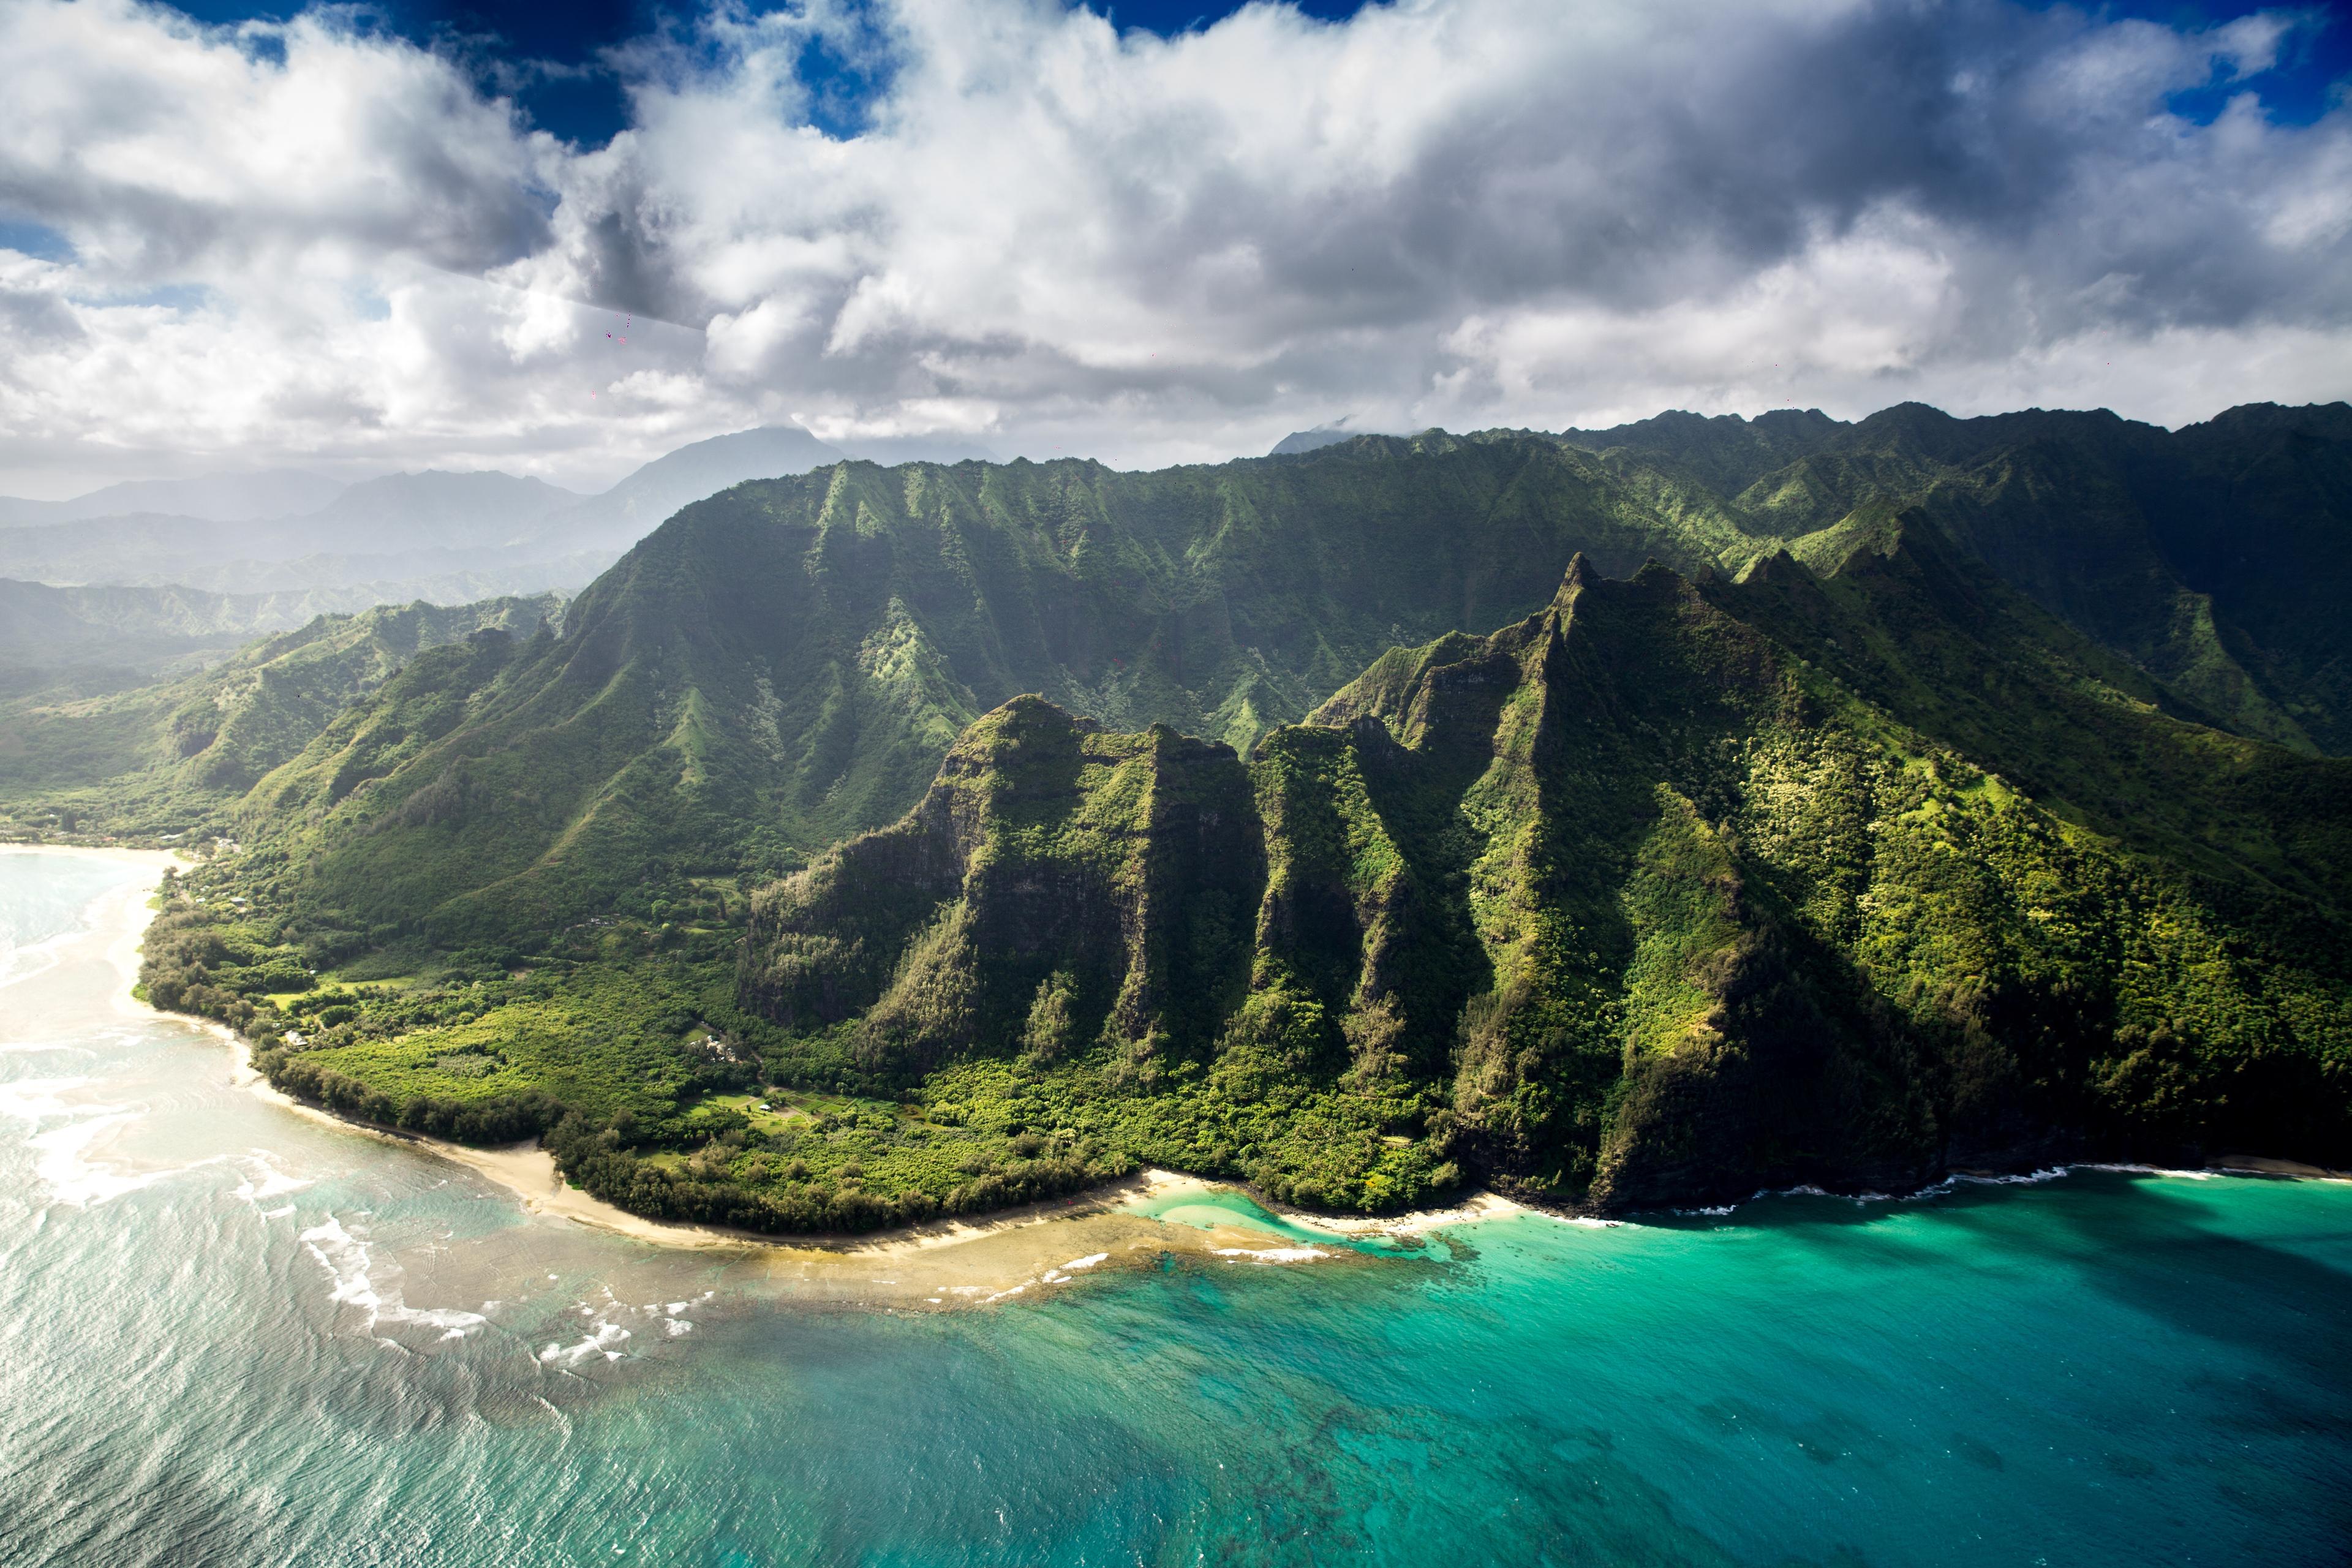 HAWAIIAN ISLANDS - PICTURE PERFECT!